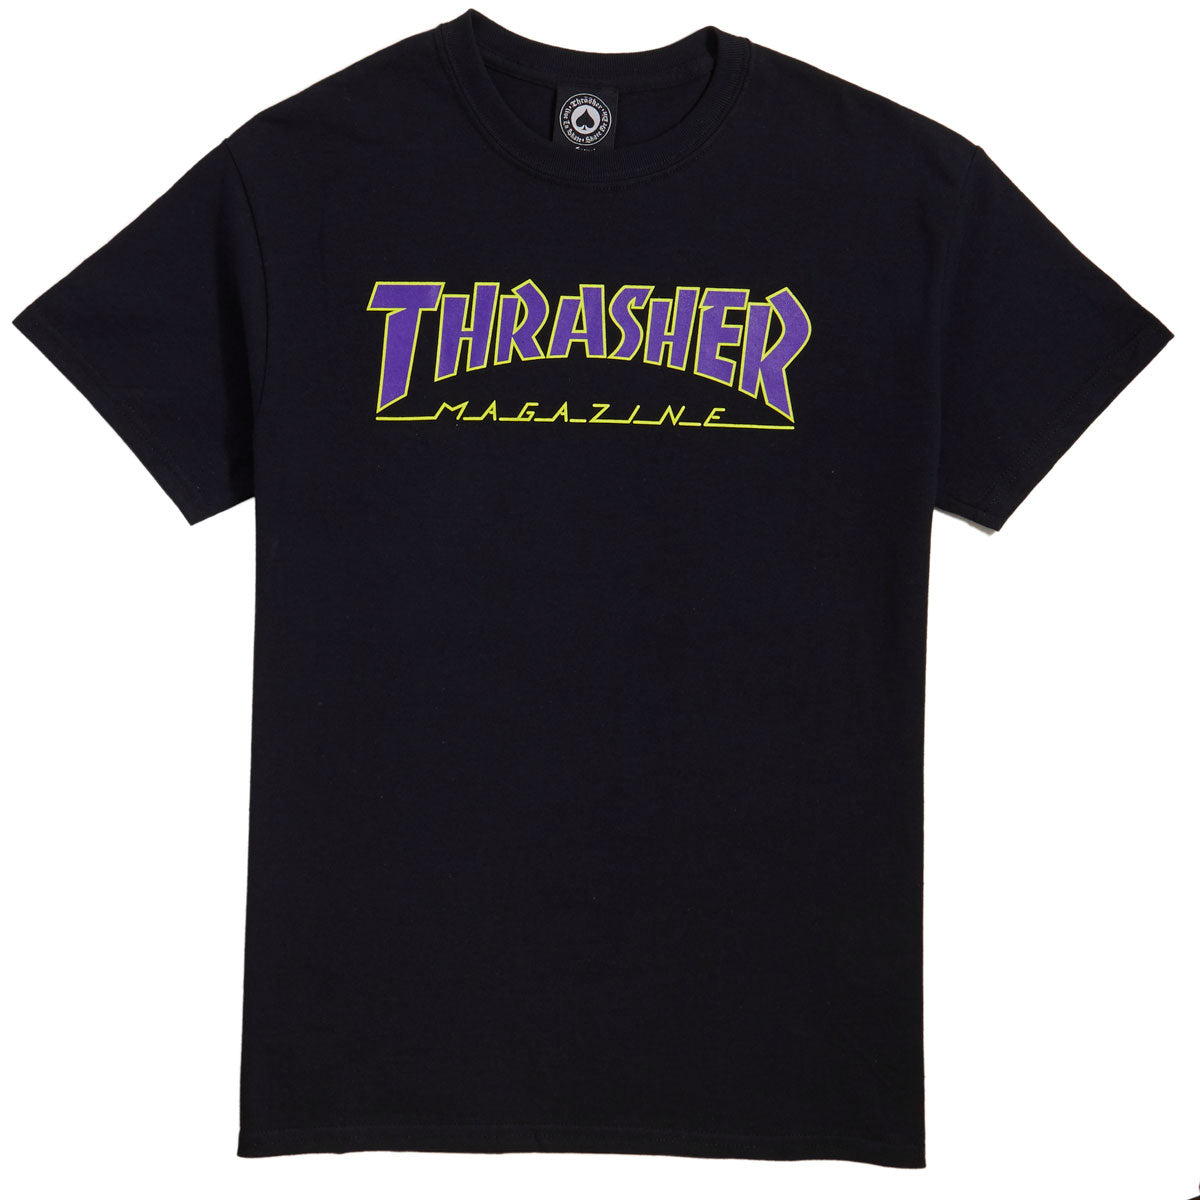 Thrasher Outlined T-Shirt - Black/Purple/Green image 1